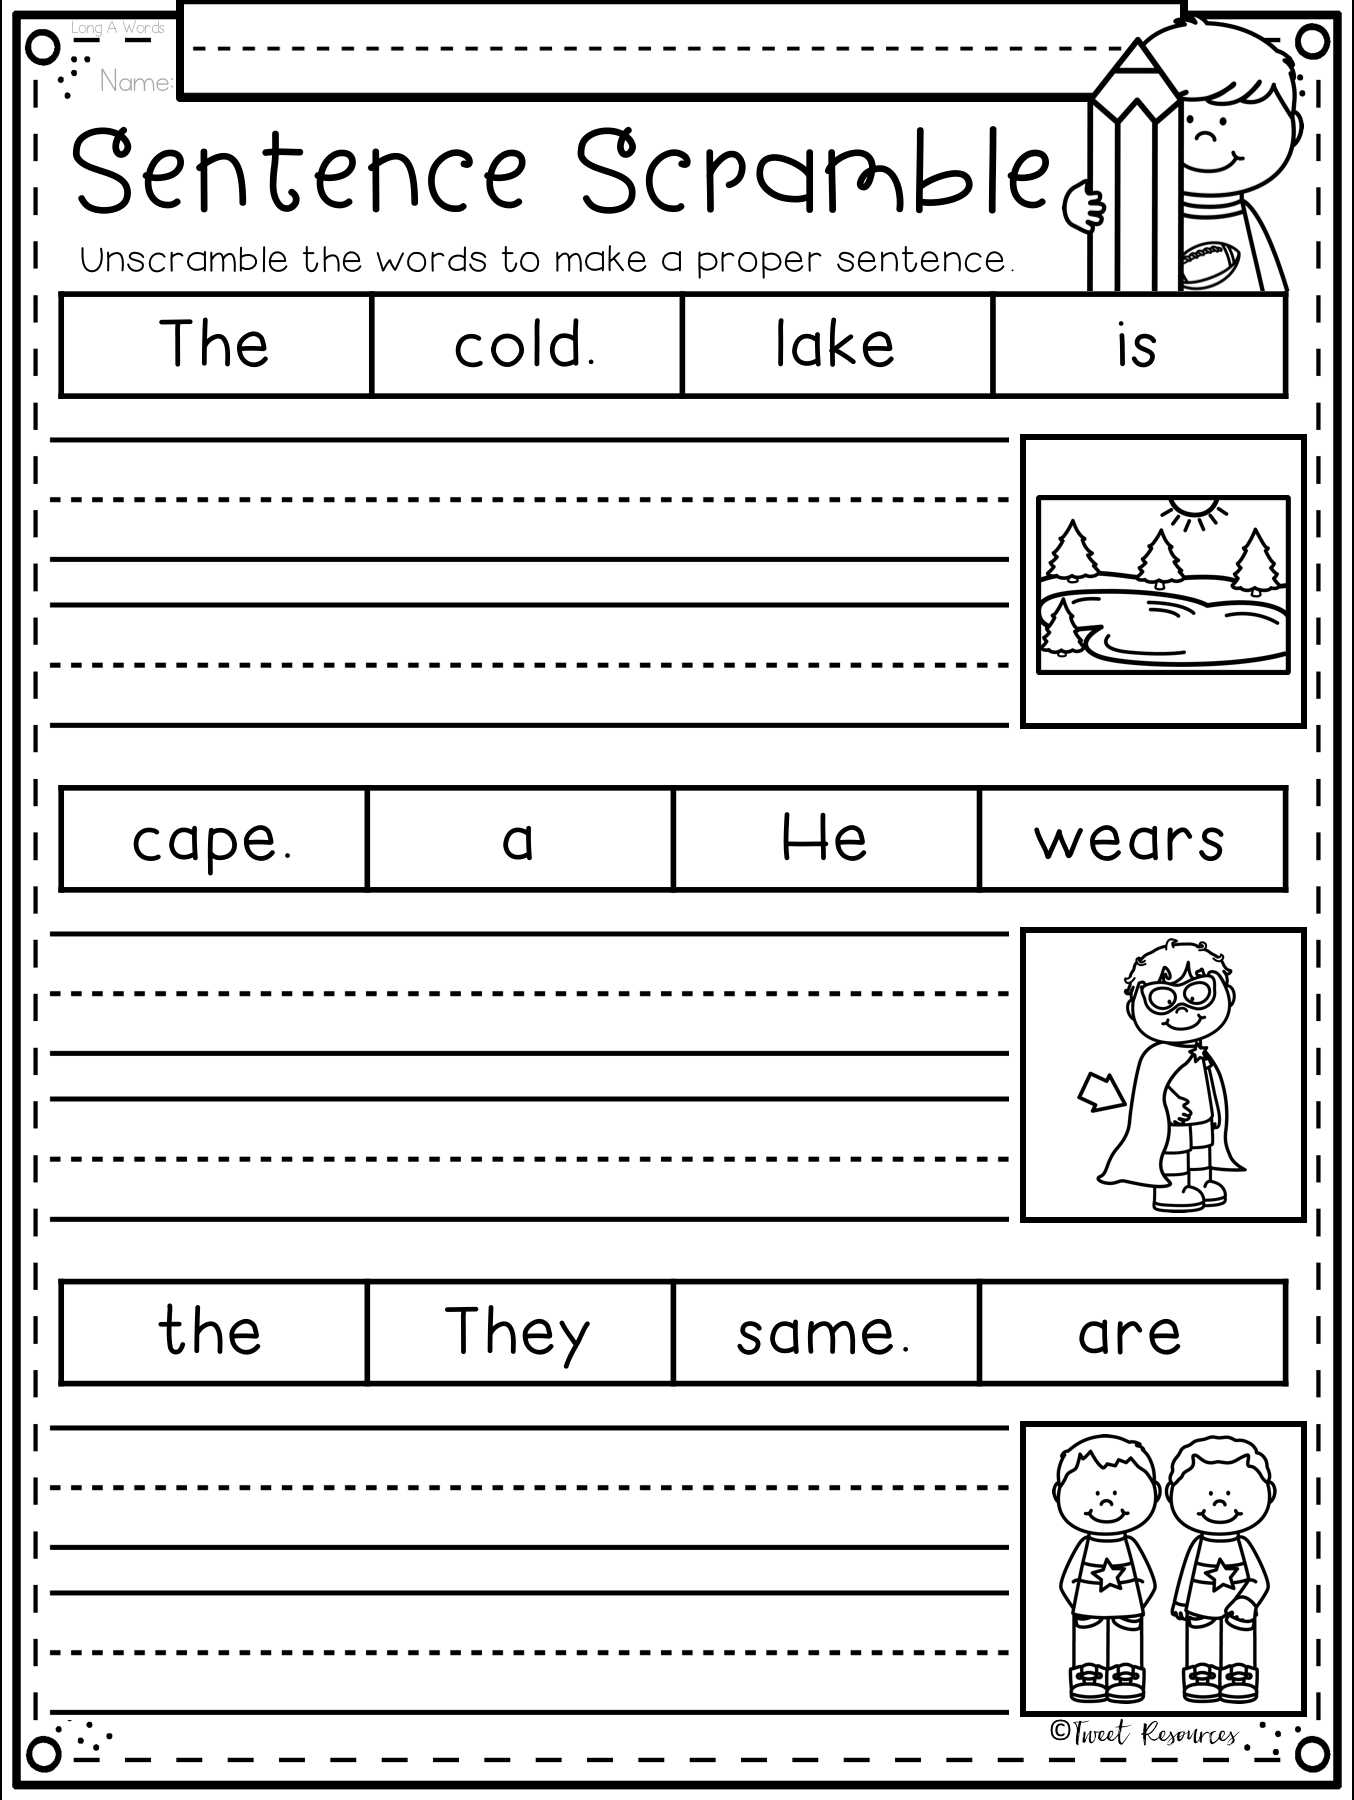 unscramble-sentences-worksheets-1st-grade